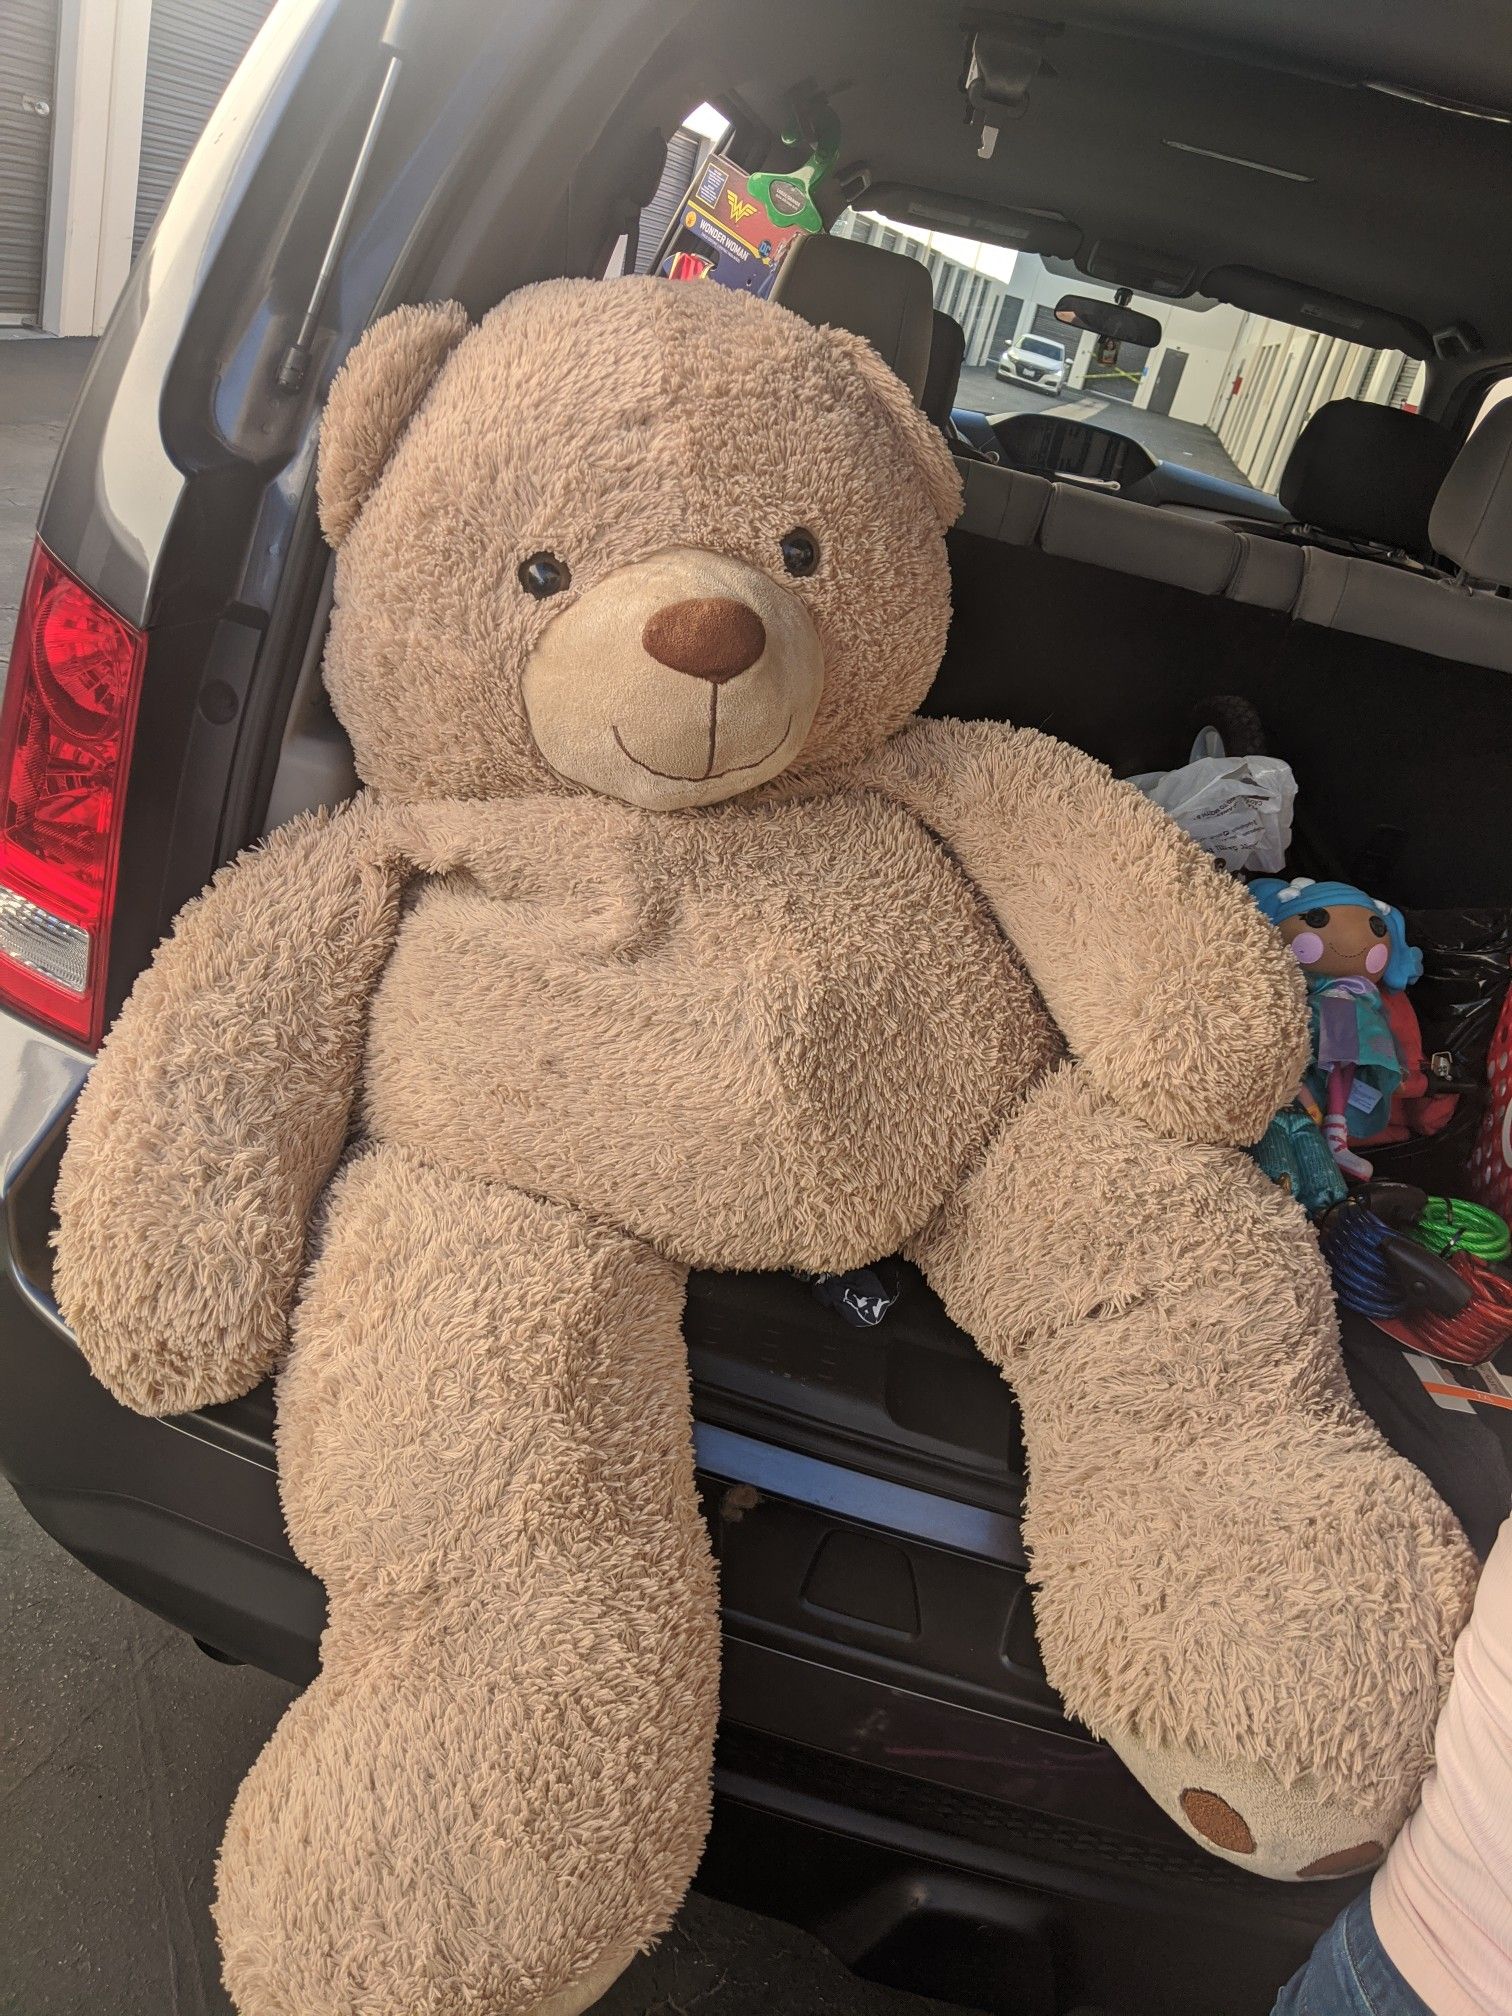 $15 Giant teddy bear OBO